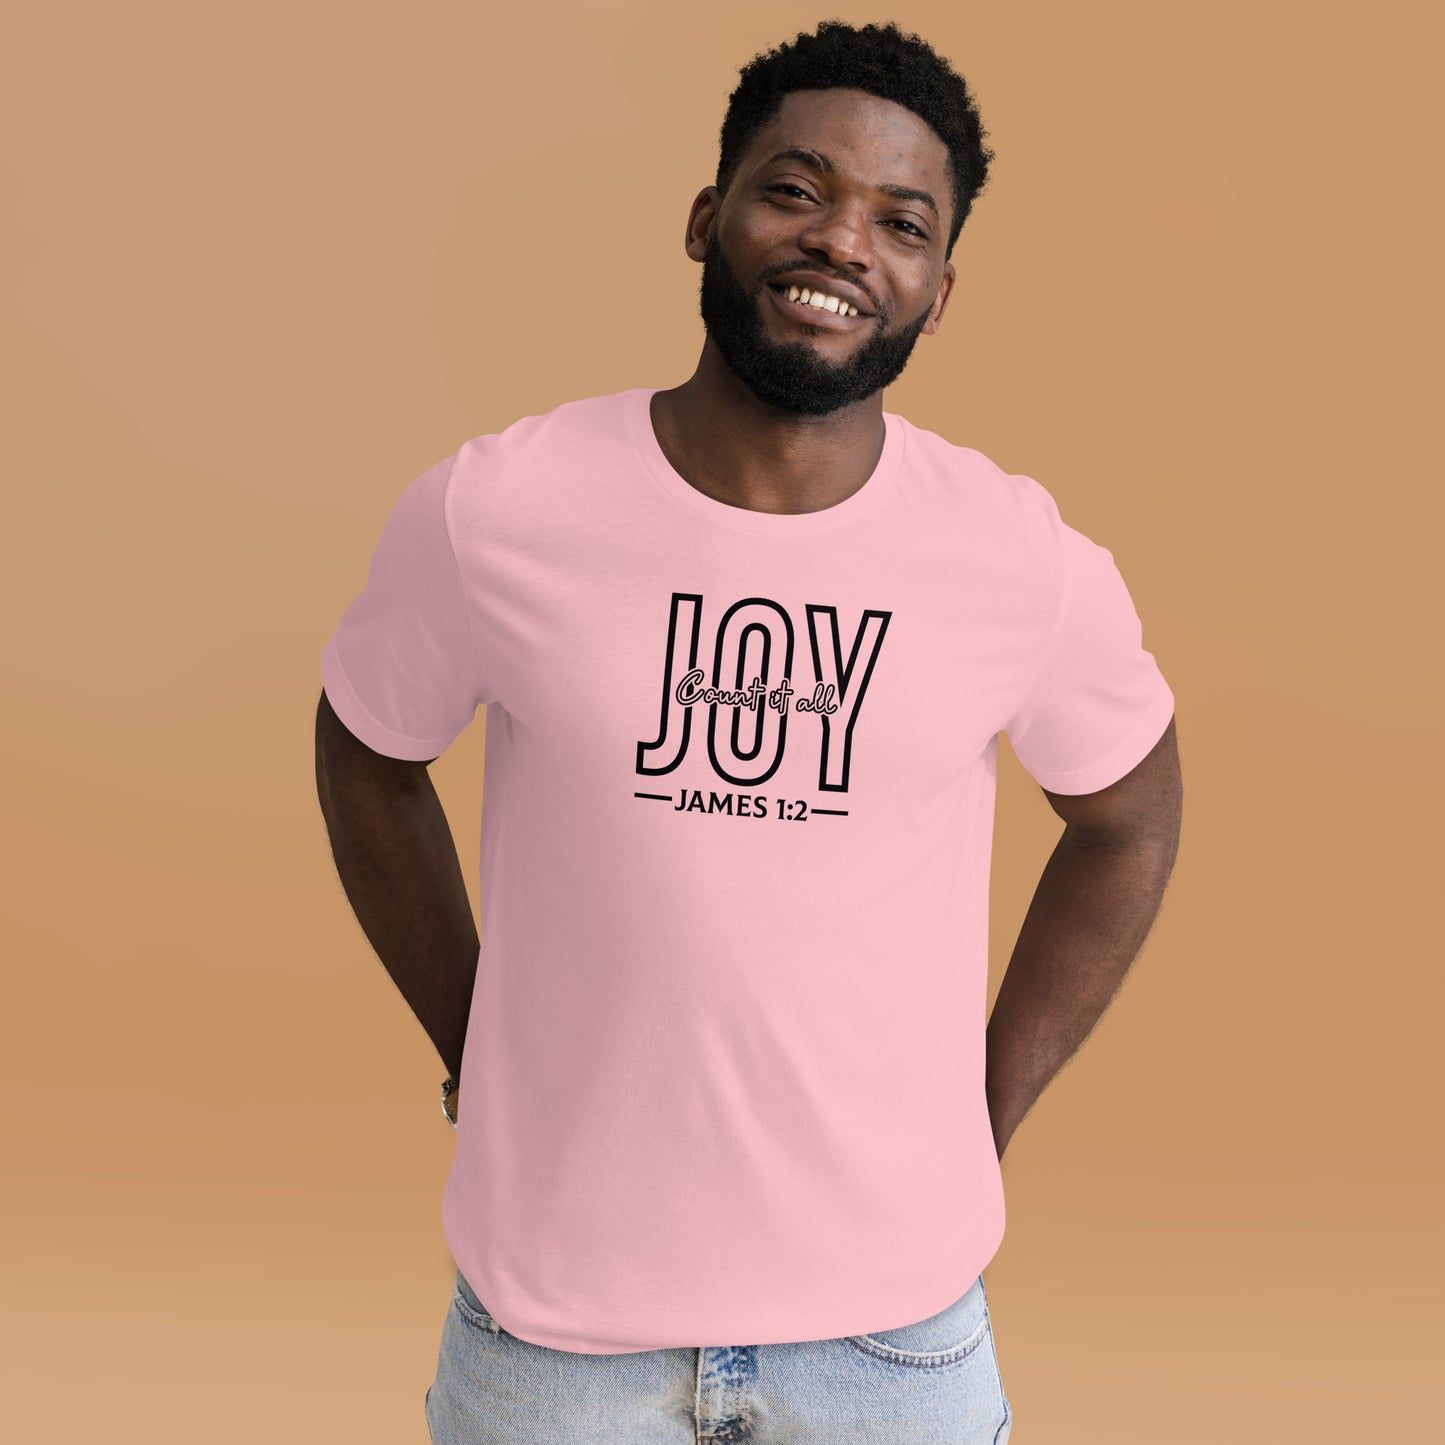 Count it all joy  t-shirt